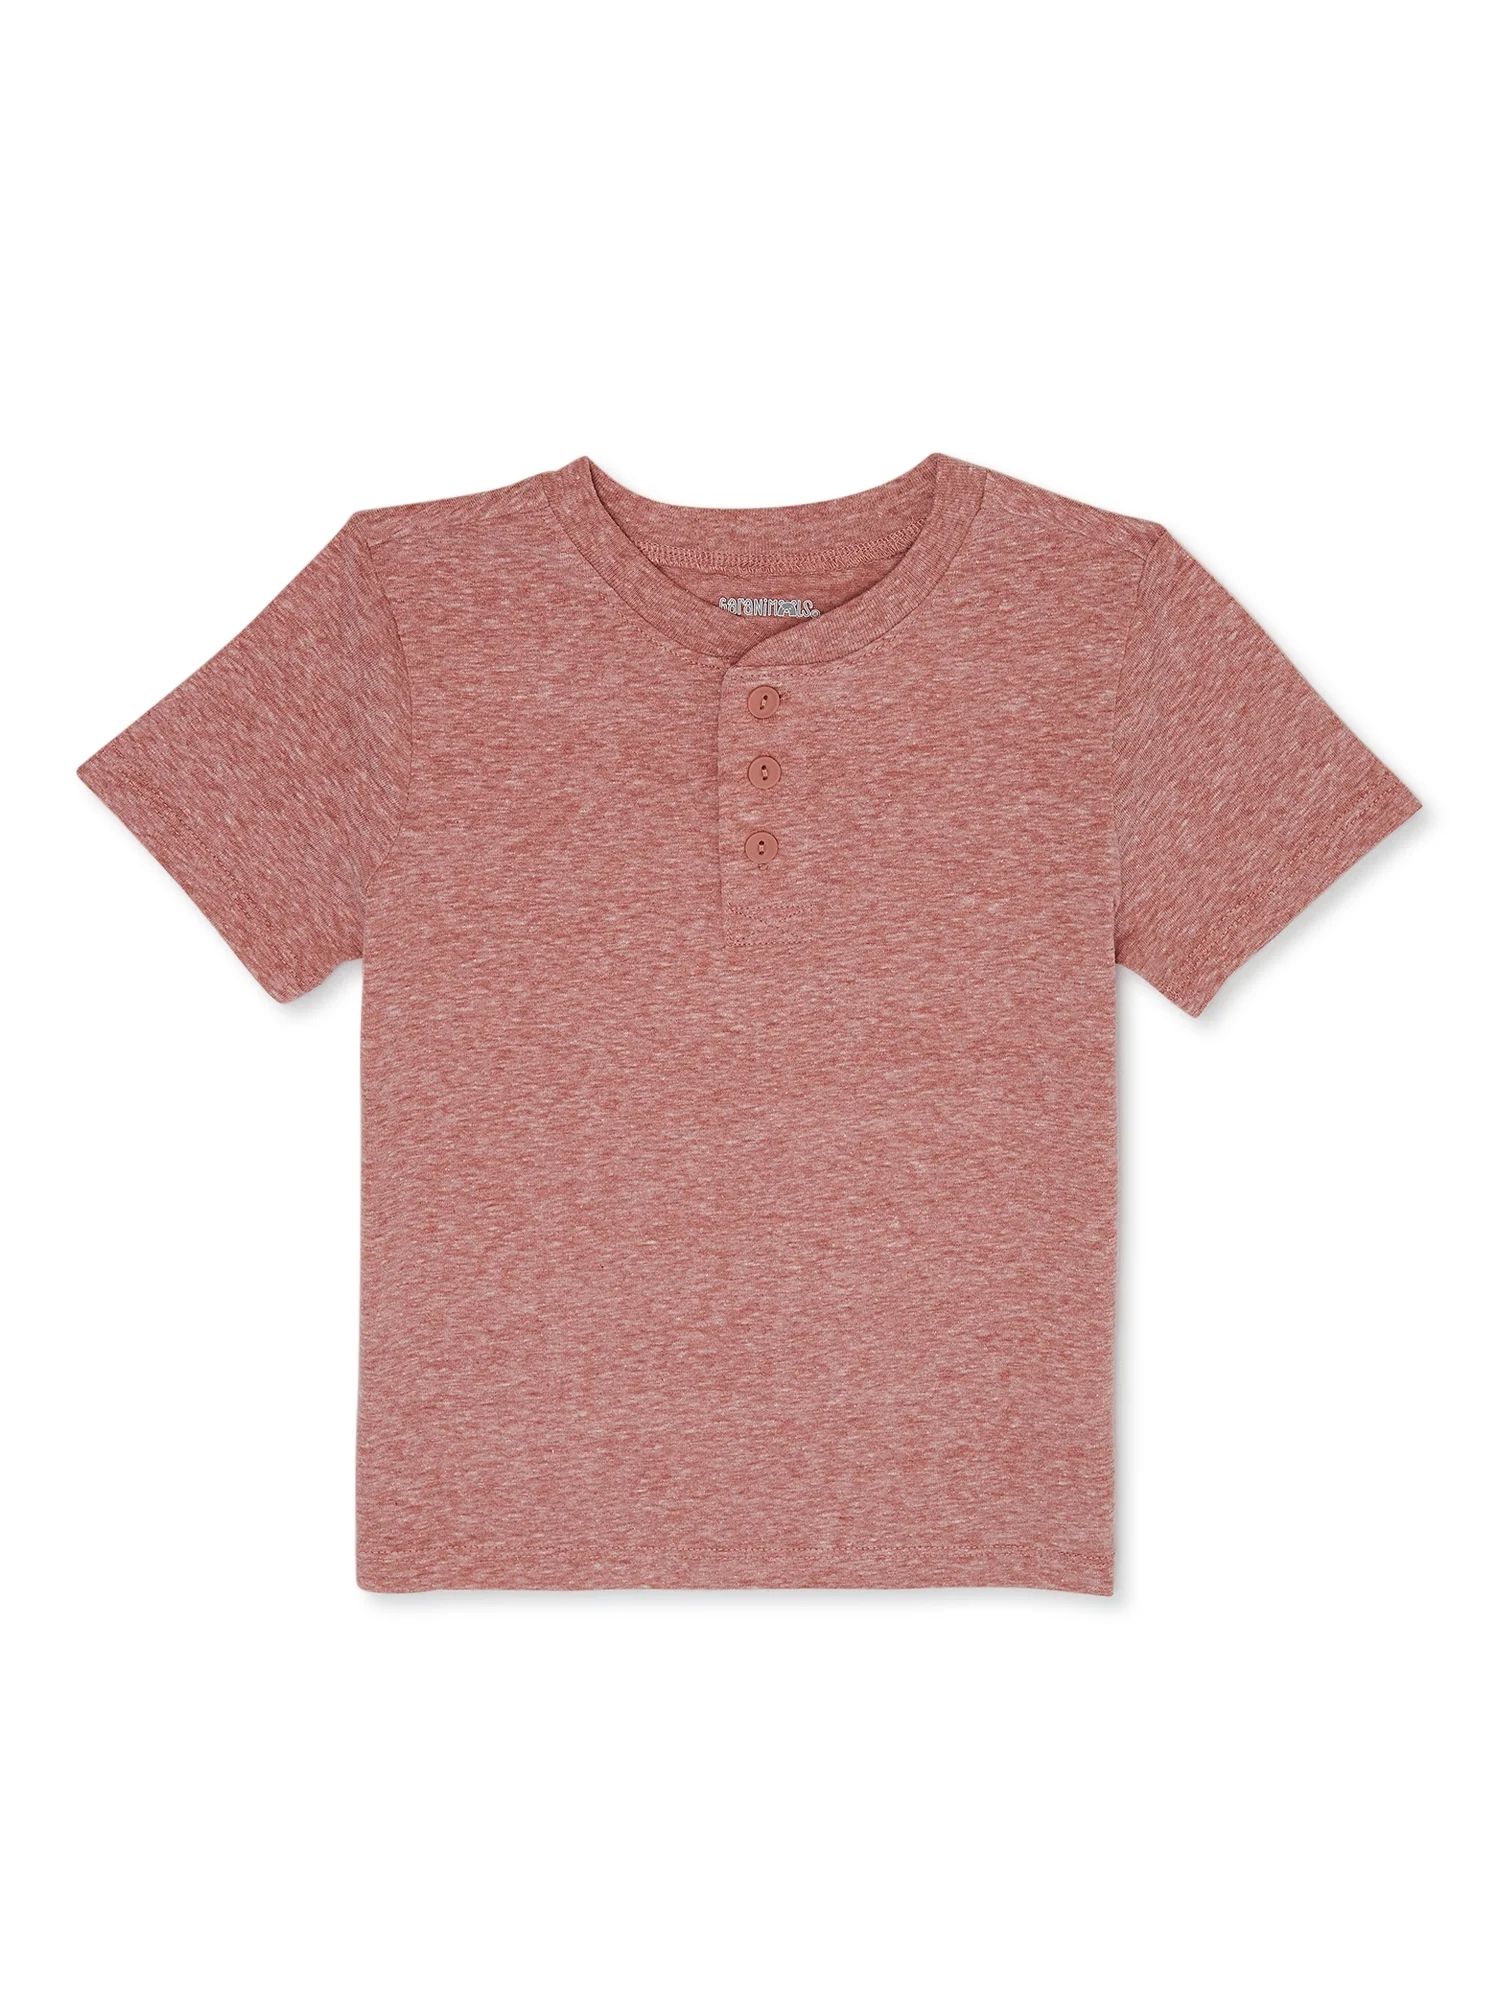 Garanimals Toddler Boy Short Sleeve Henley T-Shirt, Sizes 18M-5T | Walmart (US)